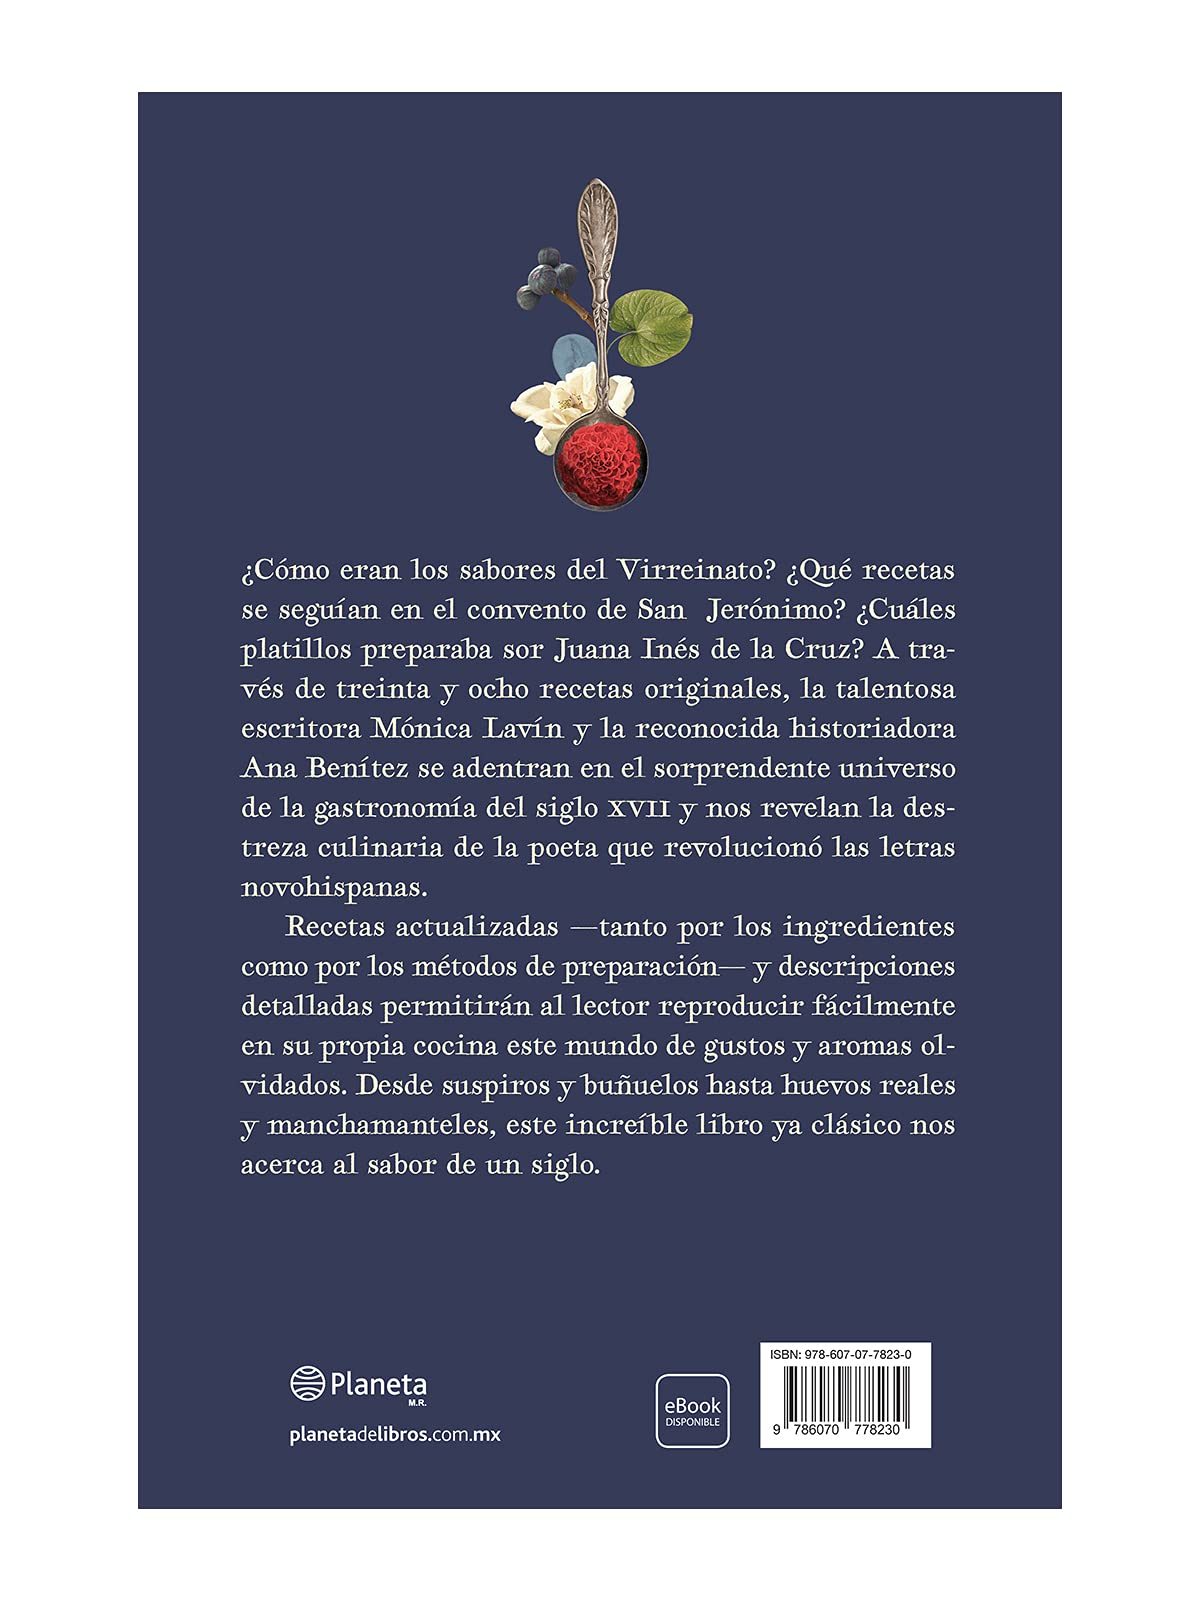 Sor Juana en la cocina (Spanish Edition - Paperback)